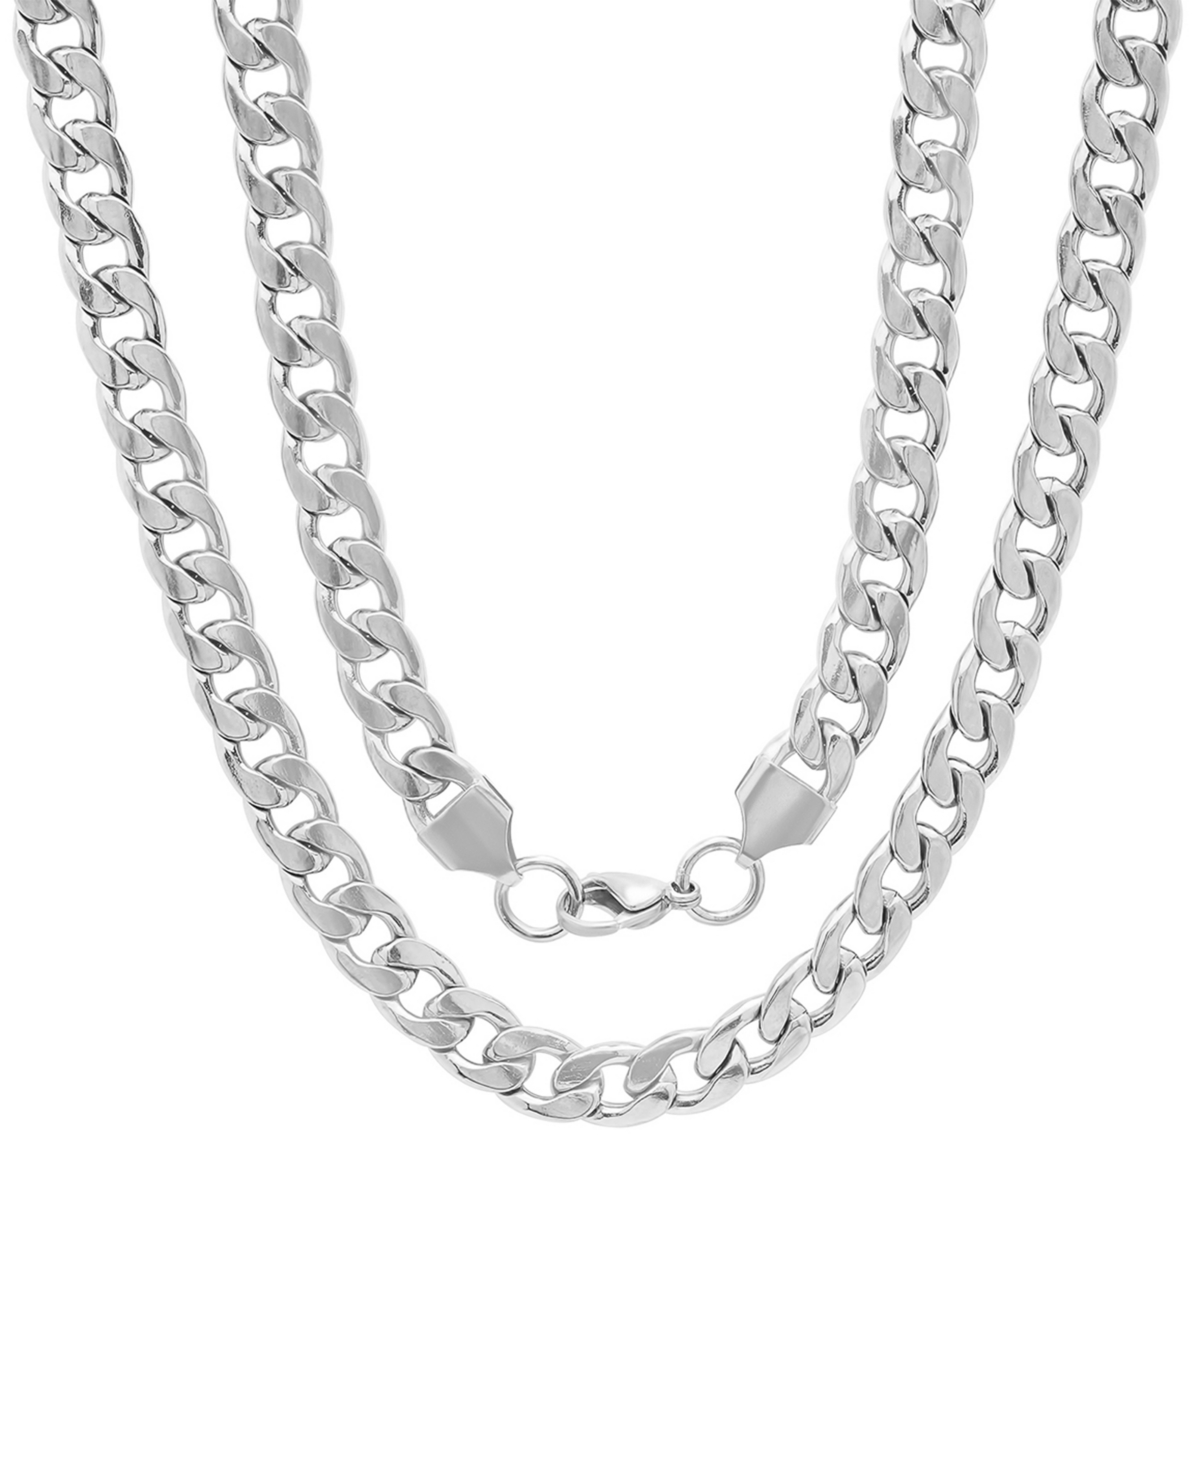 Men's Silver-Tone Curb Chain Necklace, 24" - Silver